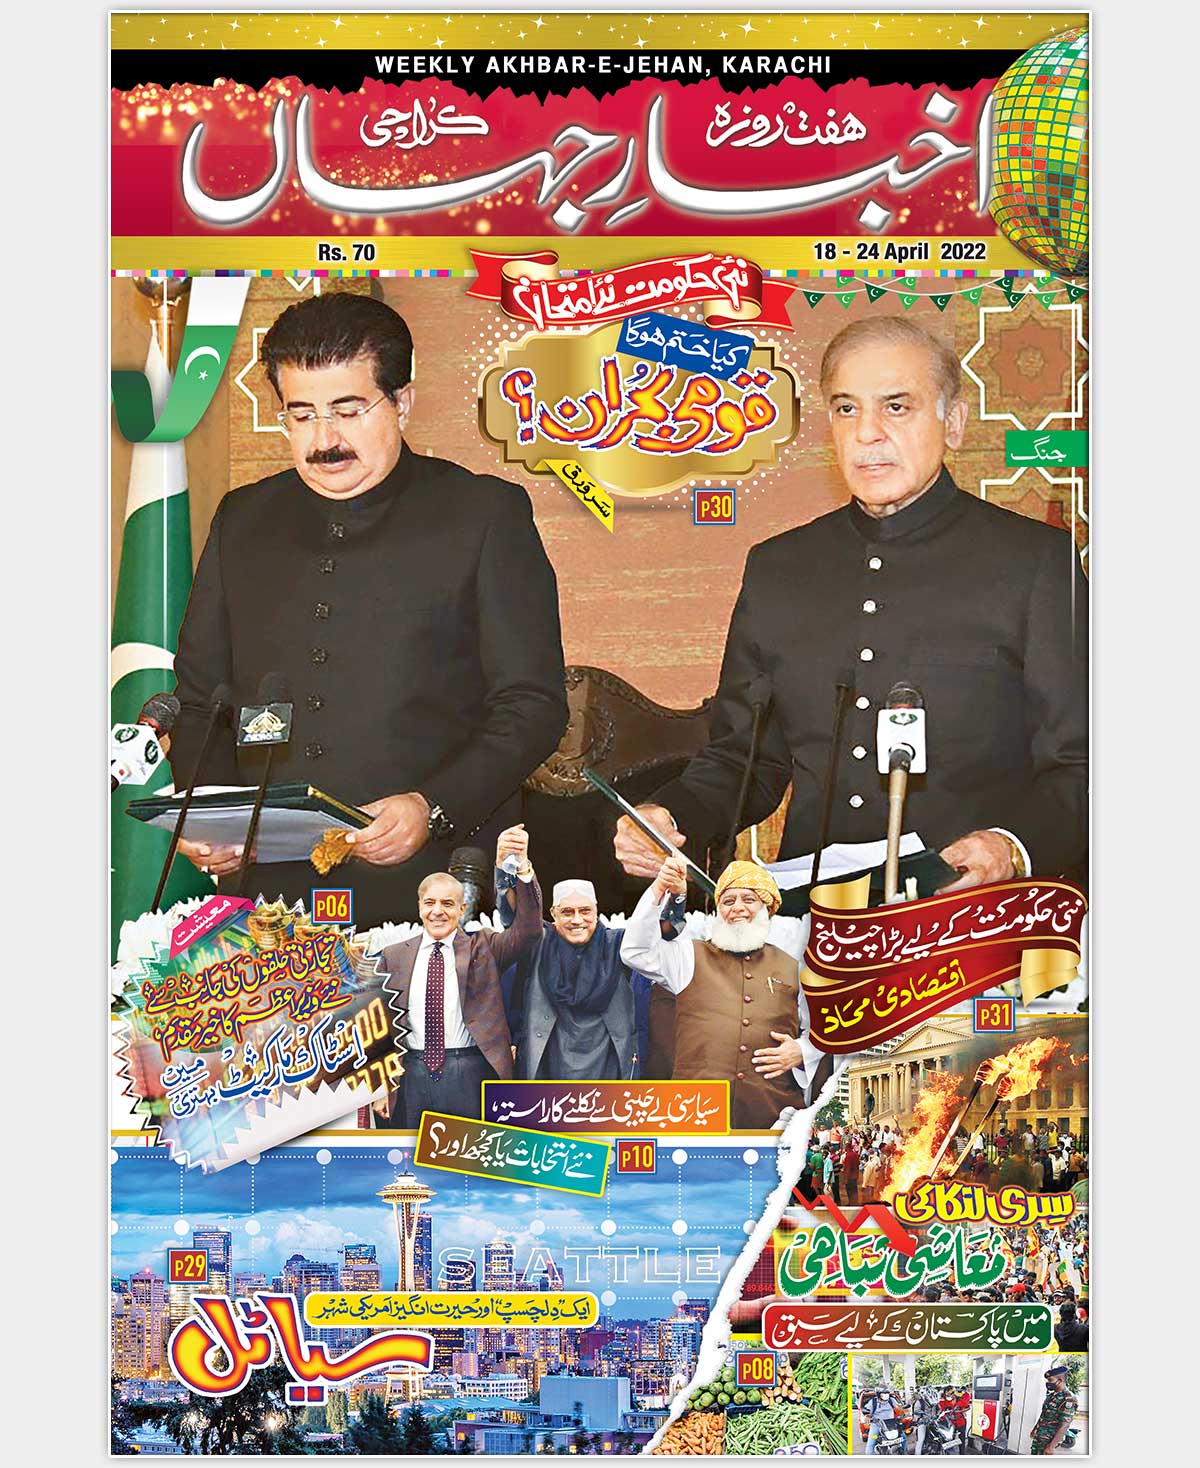 akhbar-e-jehan-latest-weekly-magazine